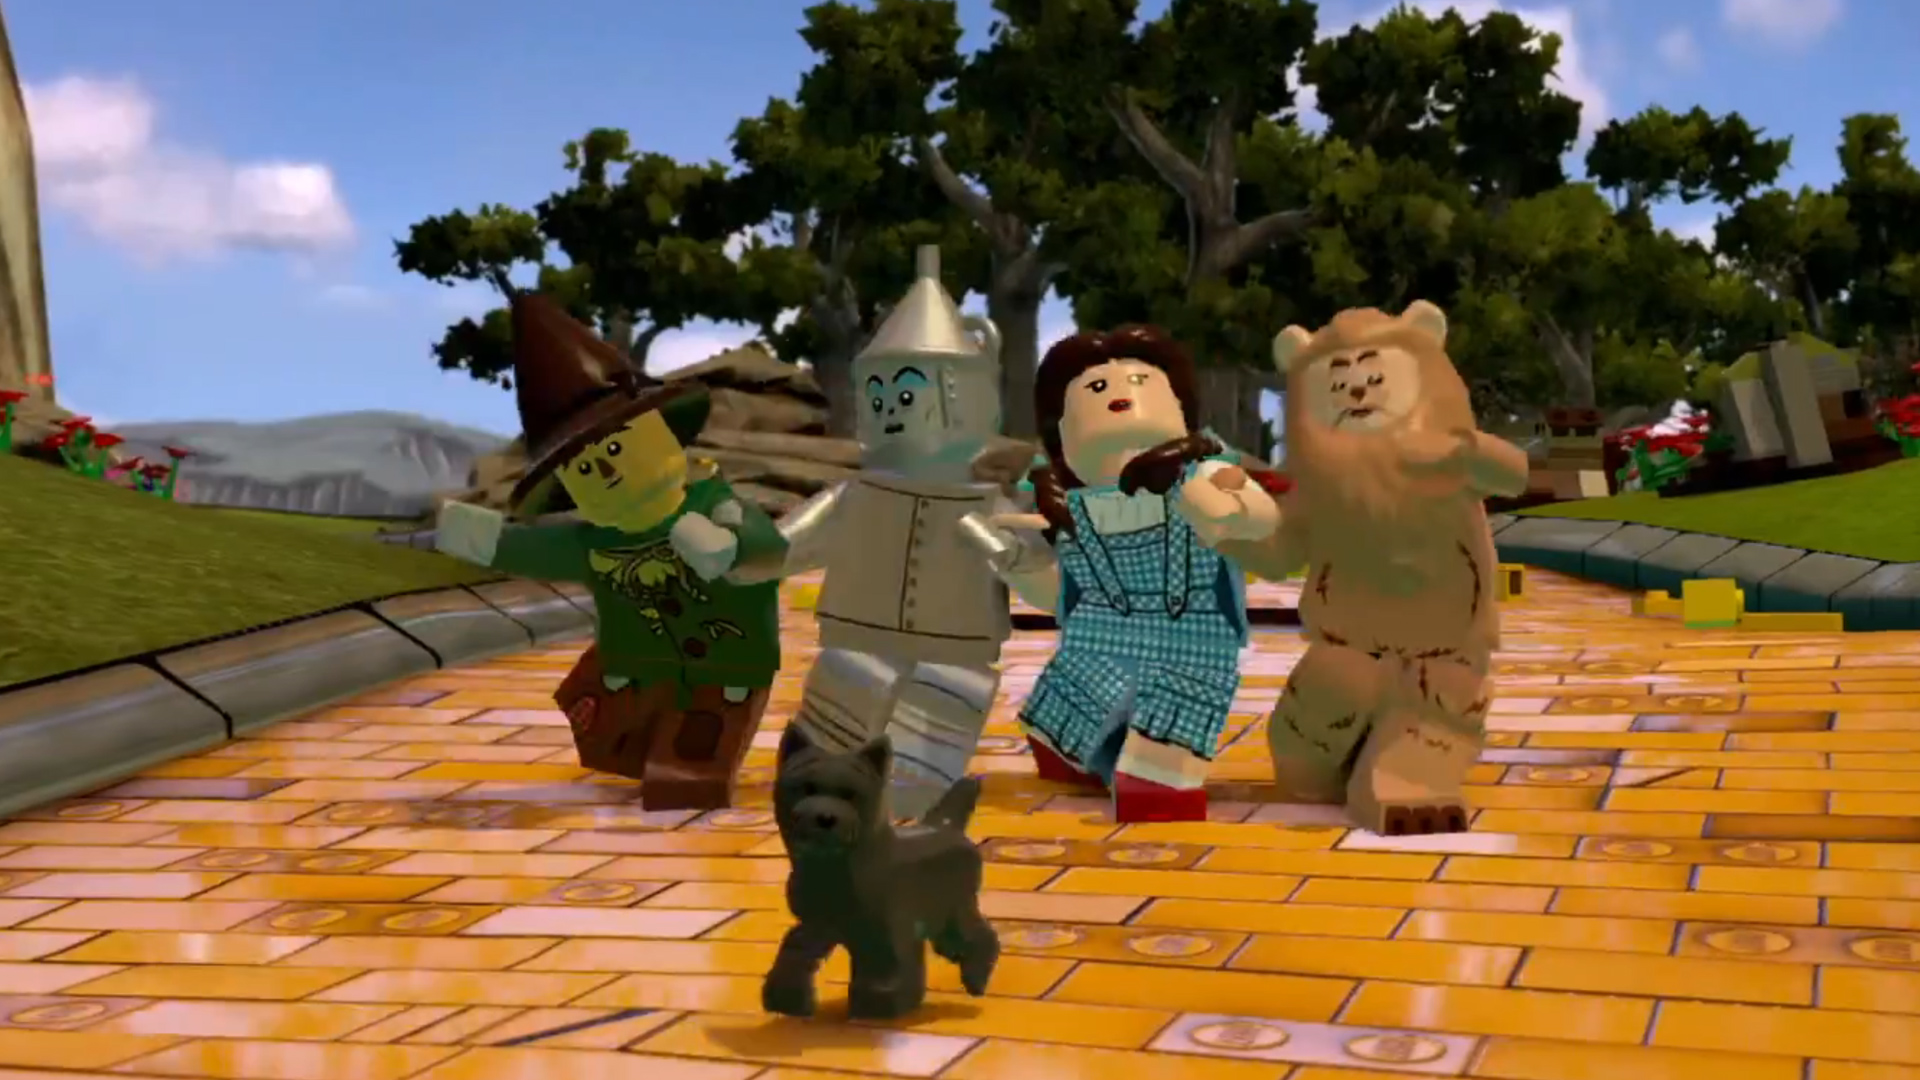 Lego Dimensions Wizard of Oz